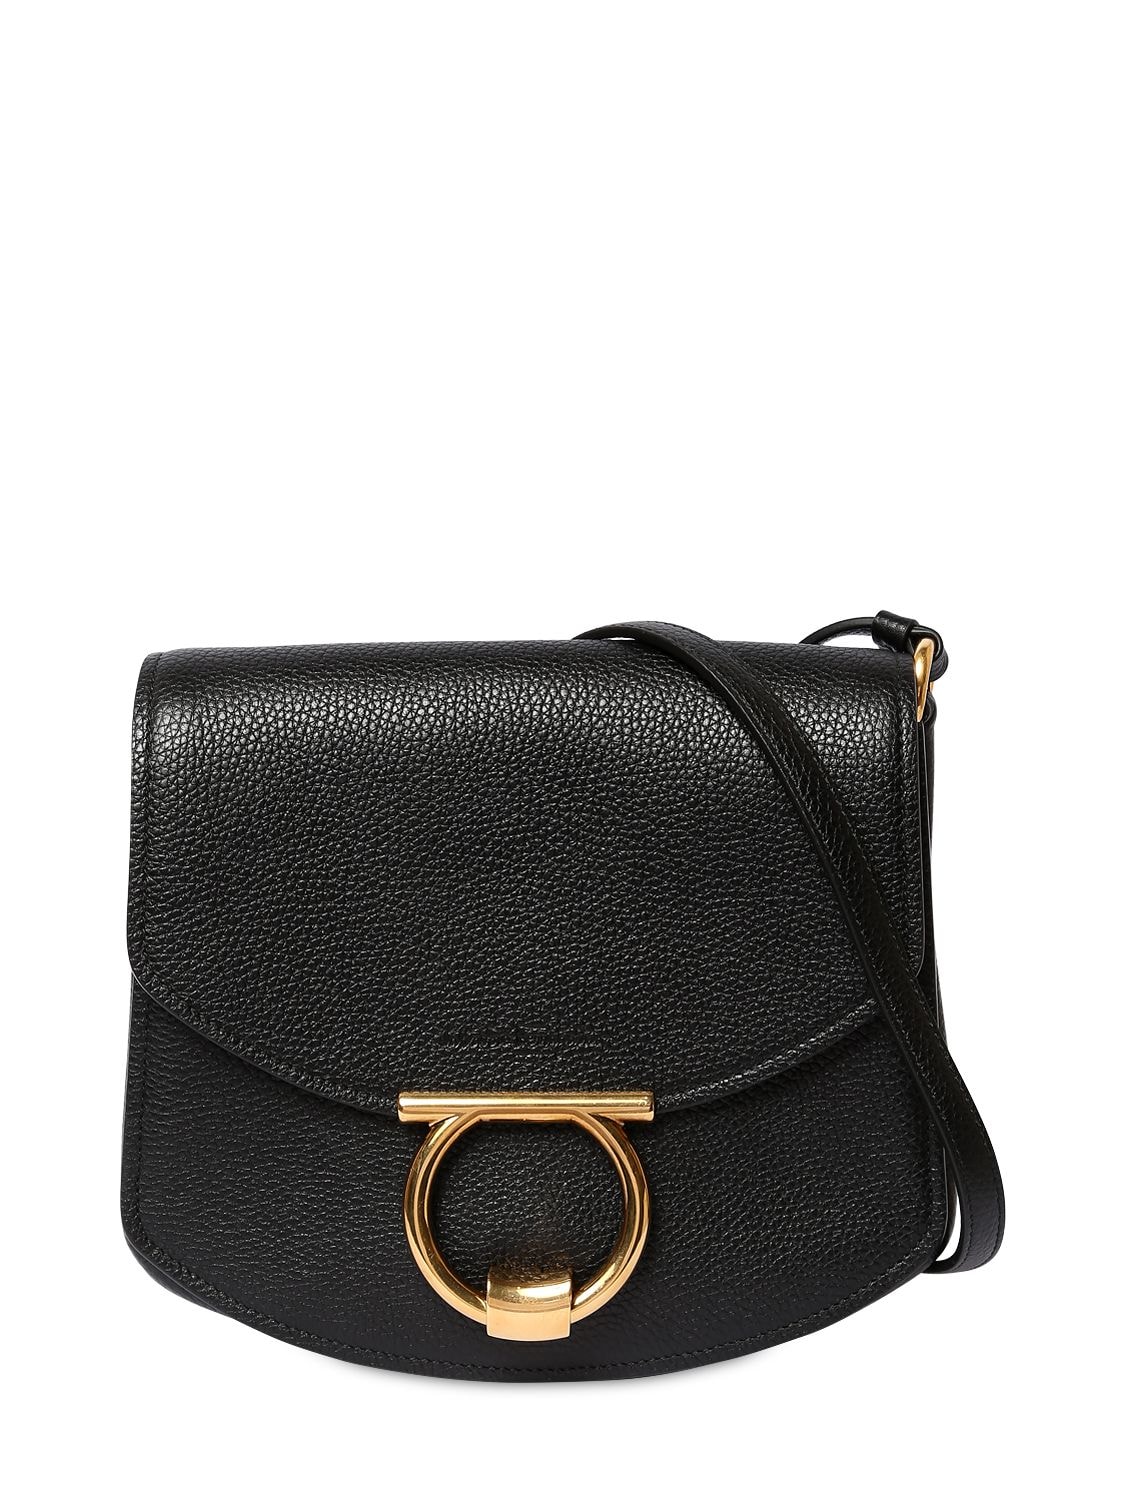 Salvatore Ferragamo Women's Small Margot Leather Saddle Bag In Black ...